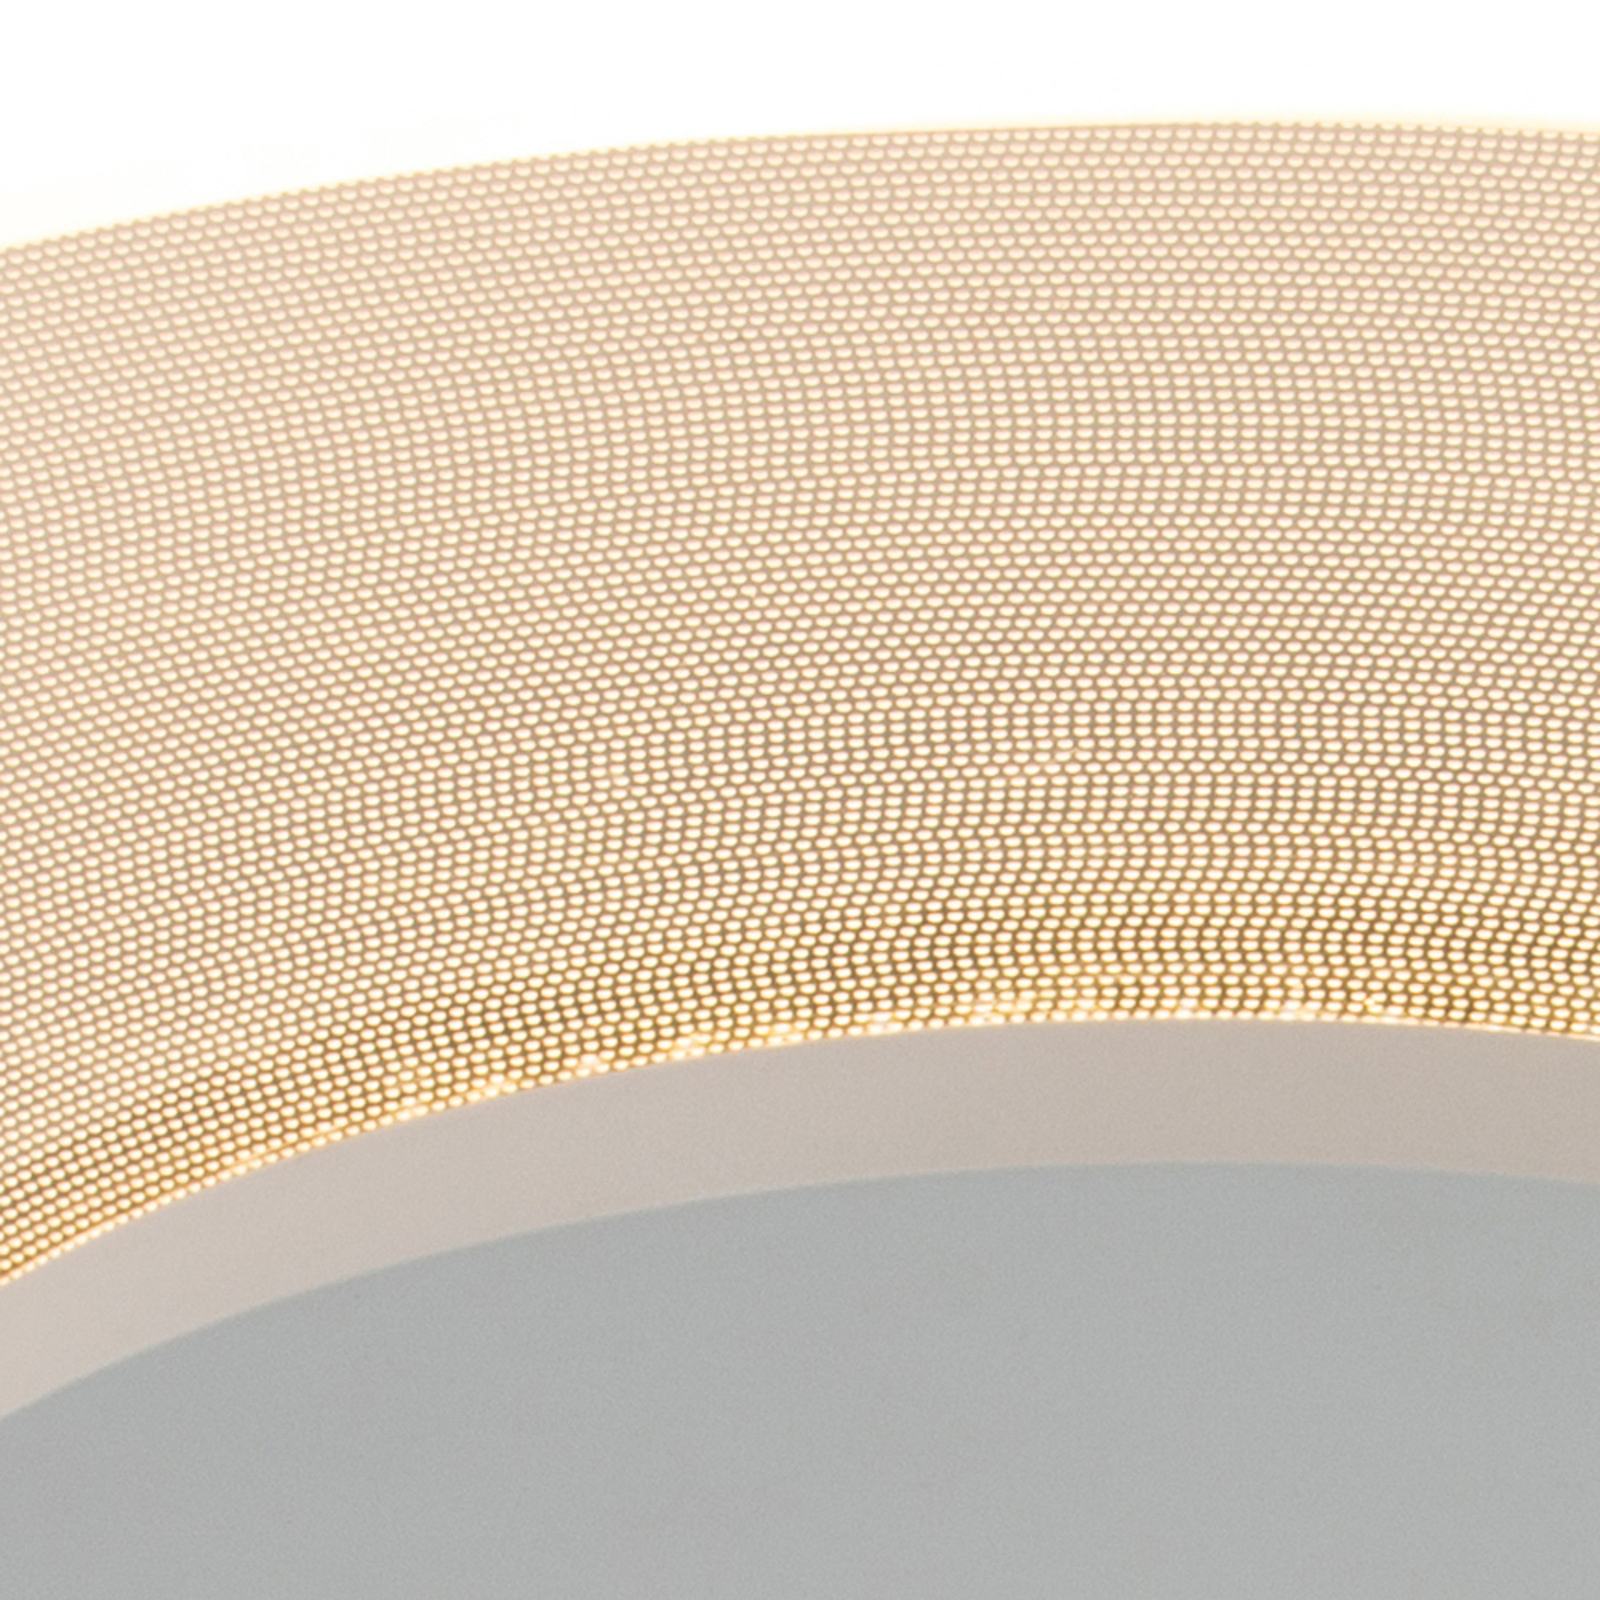 Plafonnier LED Lido, blanc, Ø 36cm